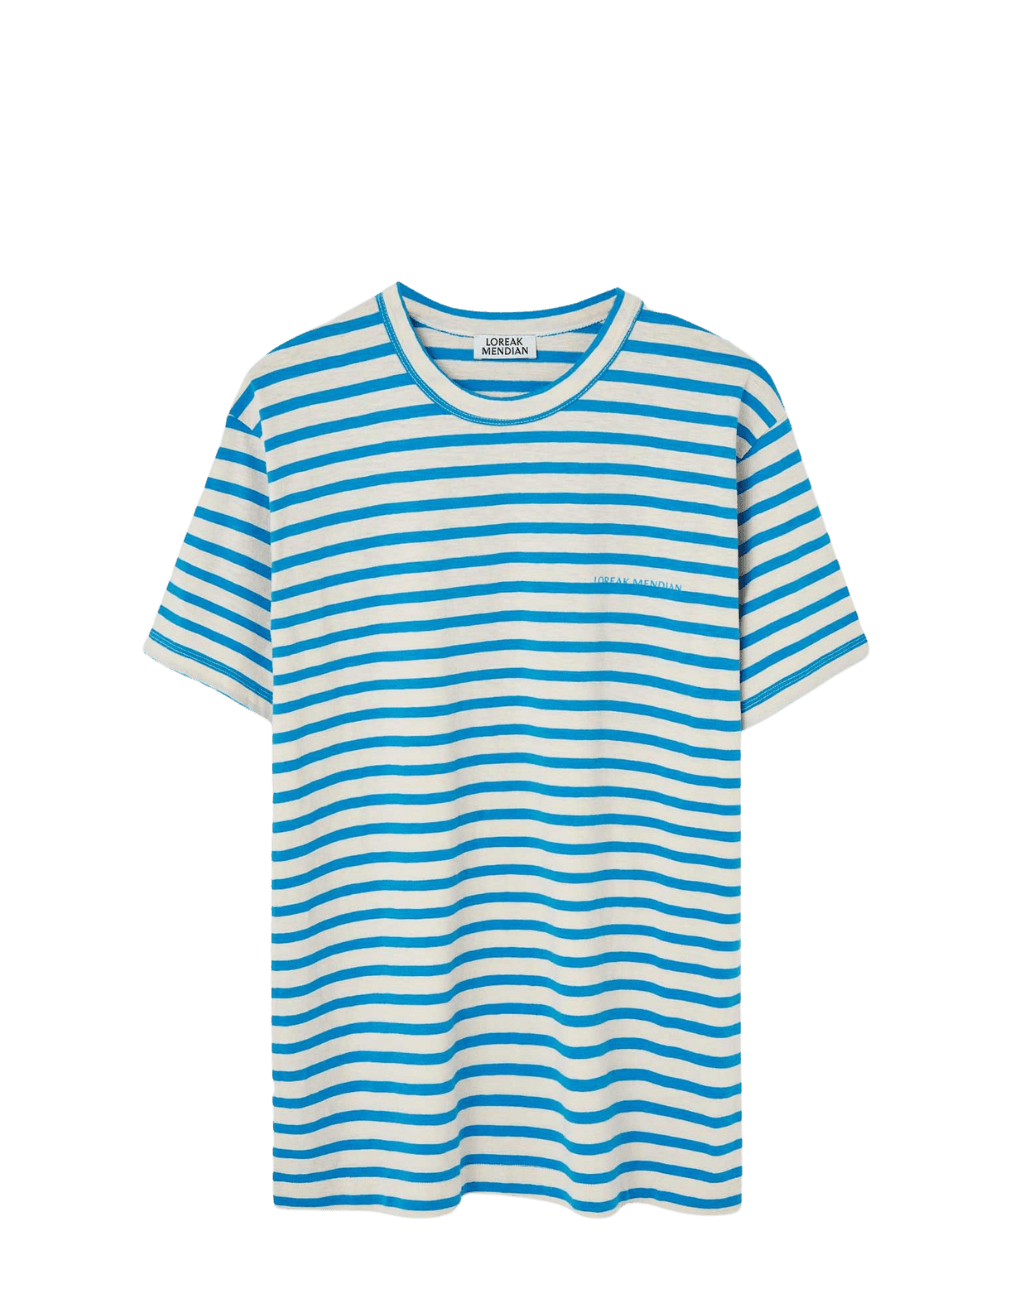 Camiseta Loreak Mendian Aingura M SS Off White Blue - ECRU